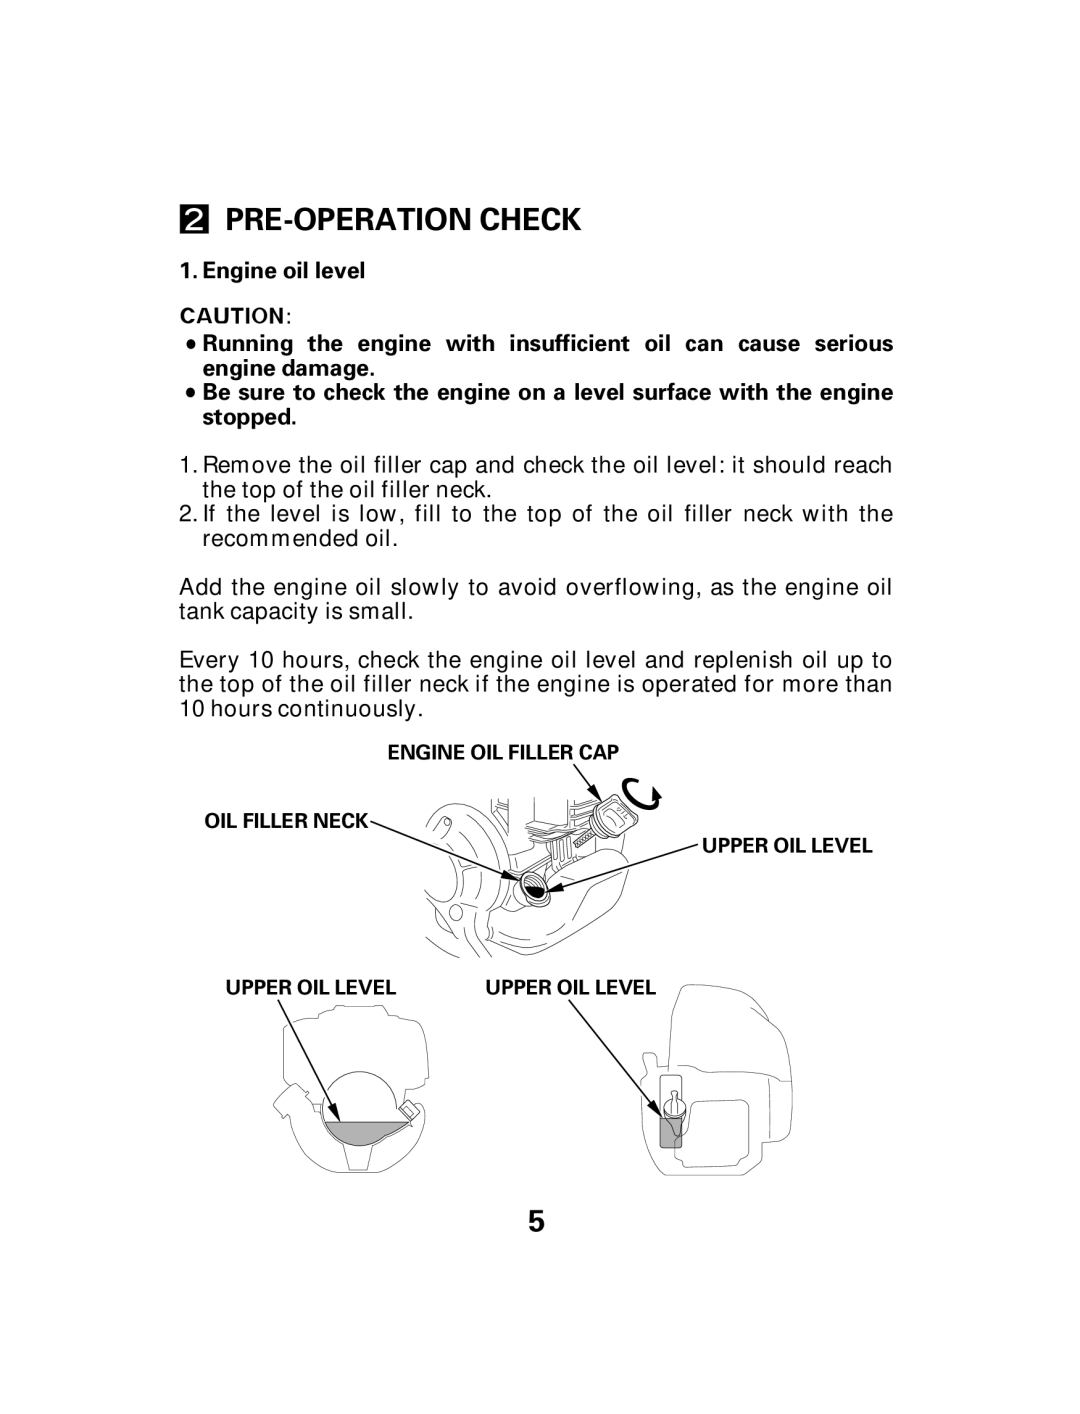 Honda Power Equipment GX25 owner manual Pre-Operationcheck 